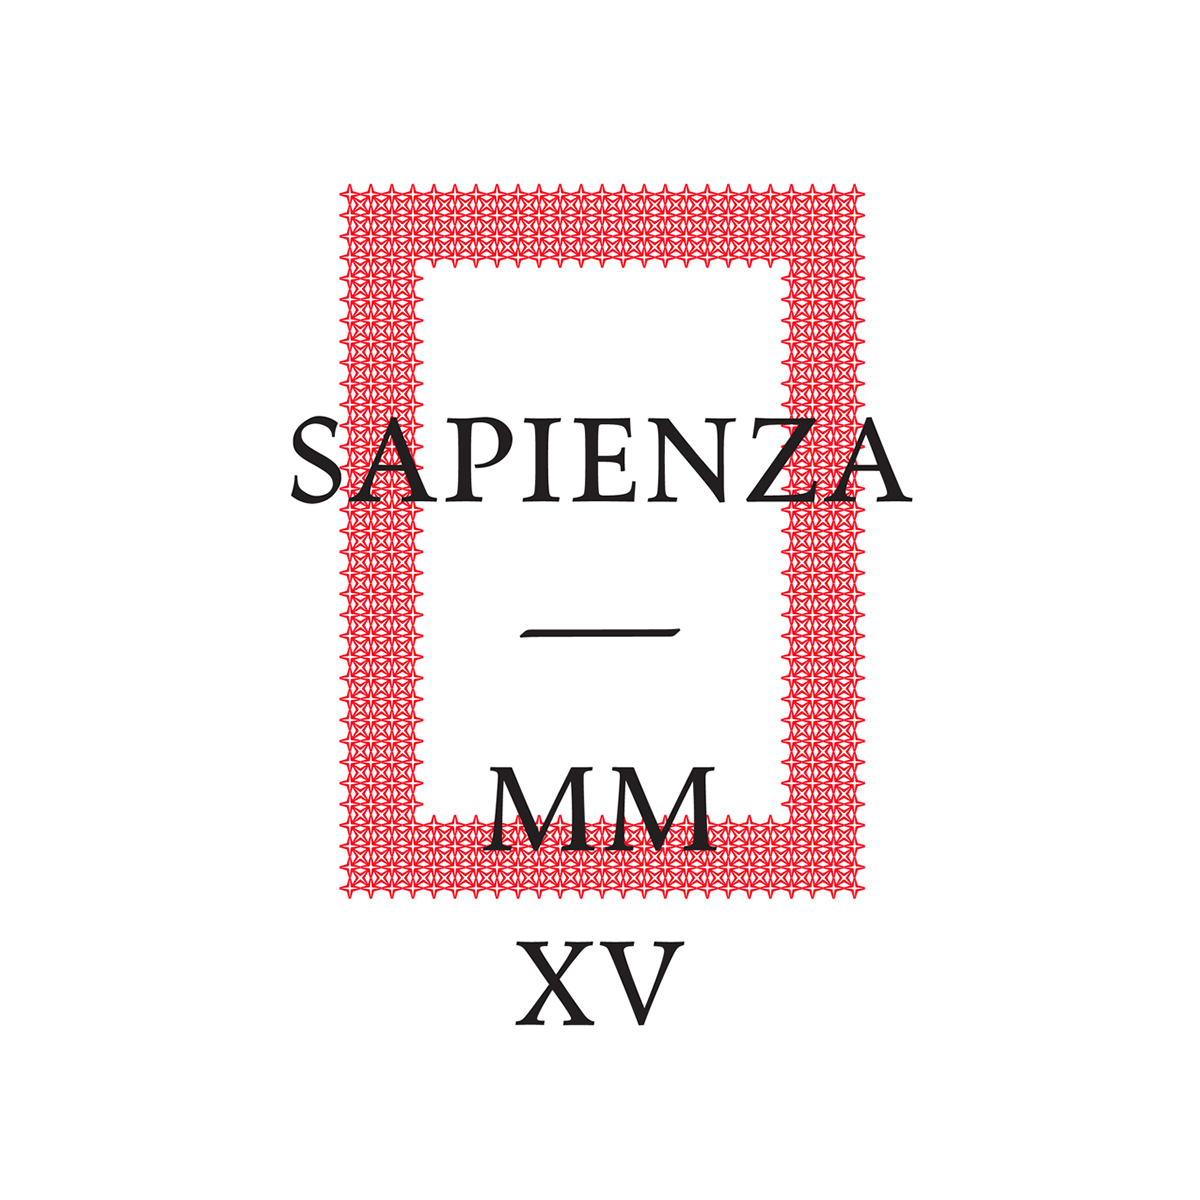 sapienza Humanist type design family Calligraphy   Typeface Typefamily font Renaissance